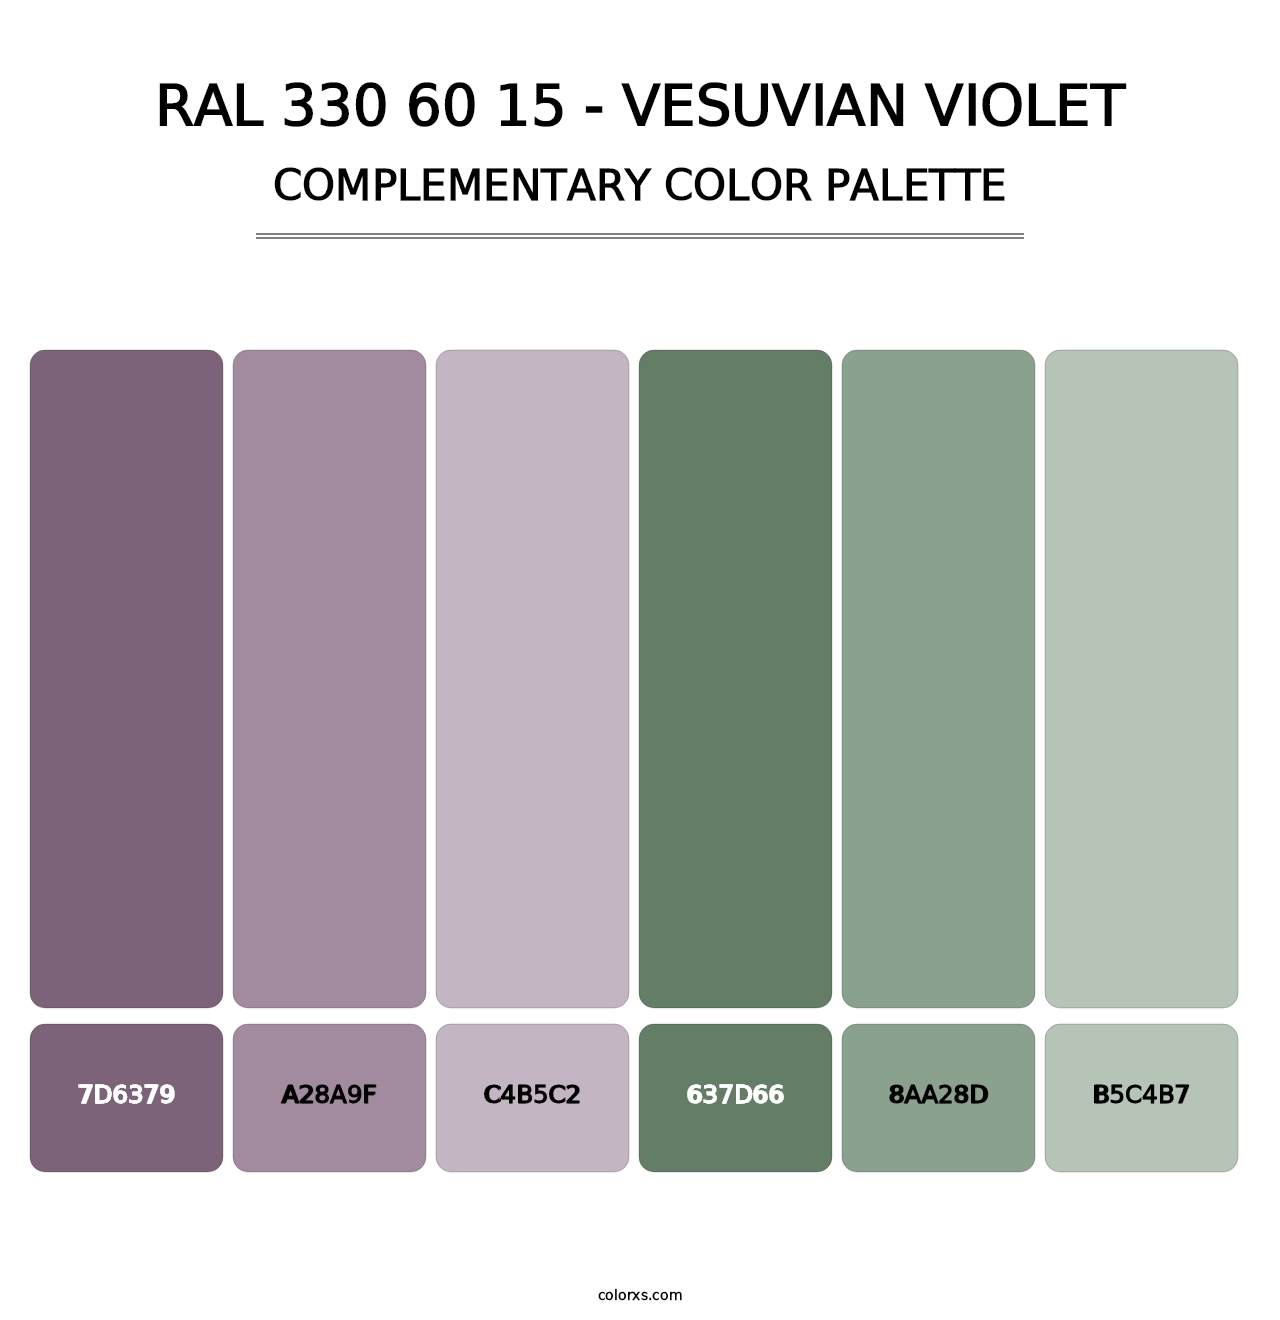 RAL 330 60 15 - Vesuvian Violet - Complementary Color Palette